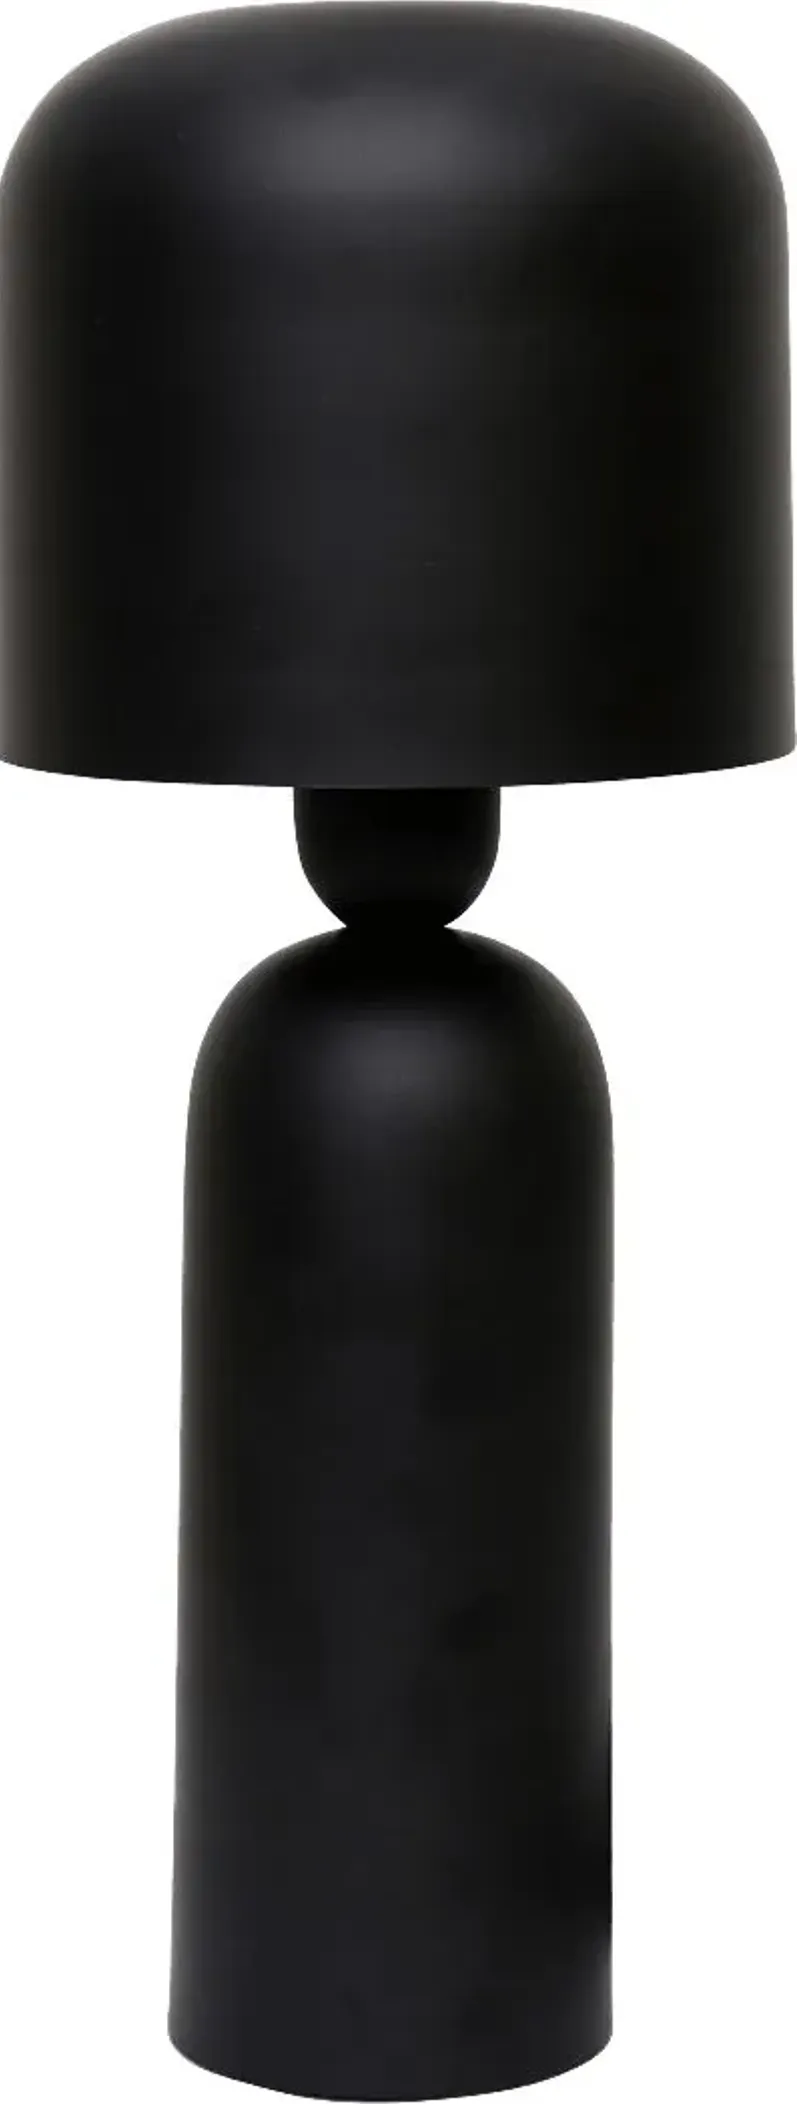 Ashcreek Black Table Lamp